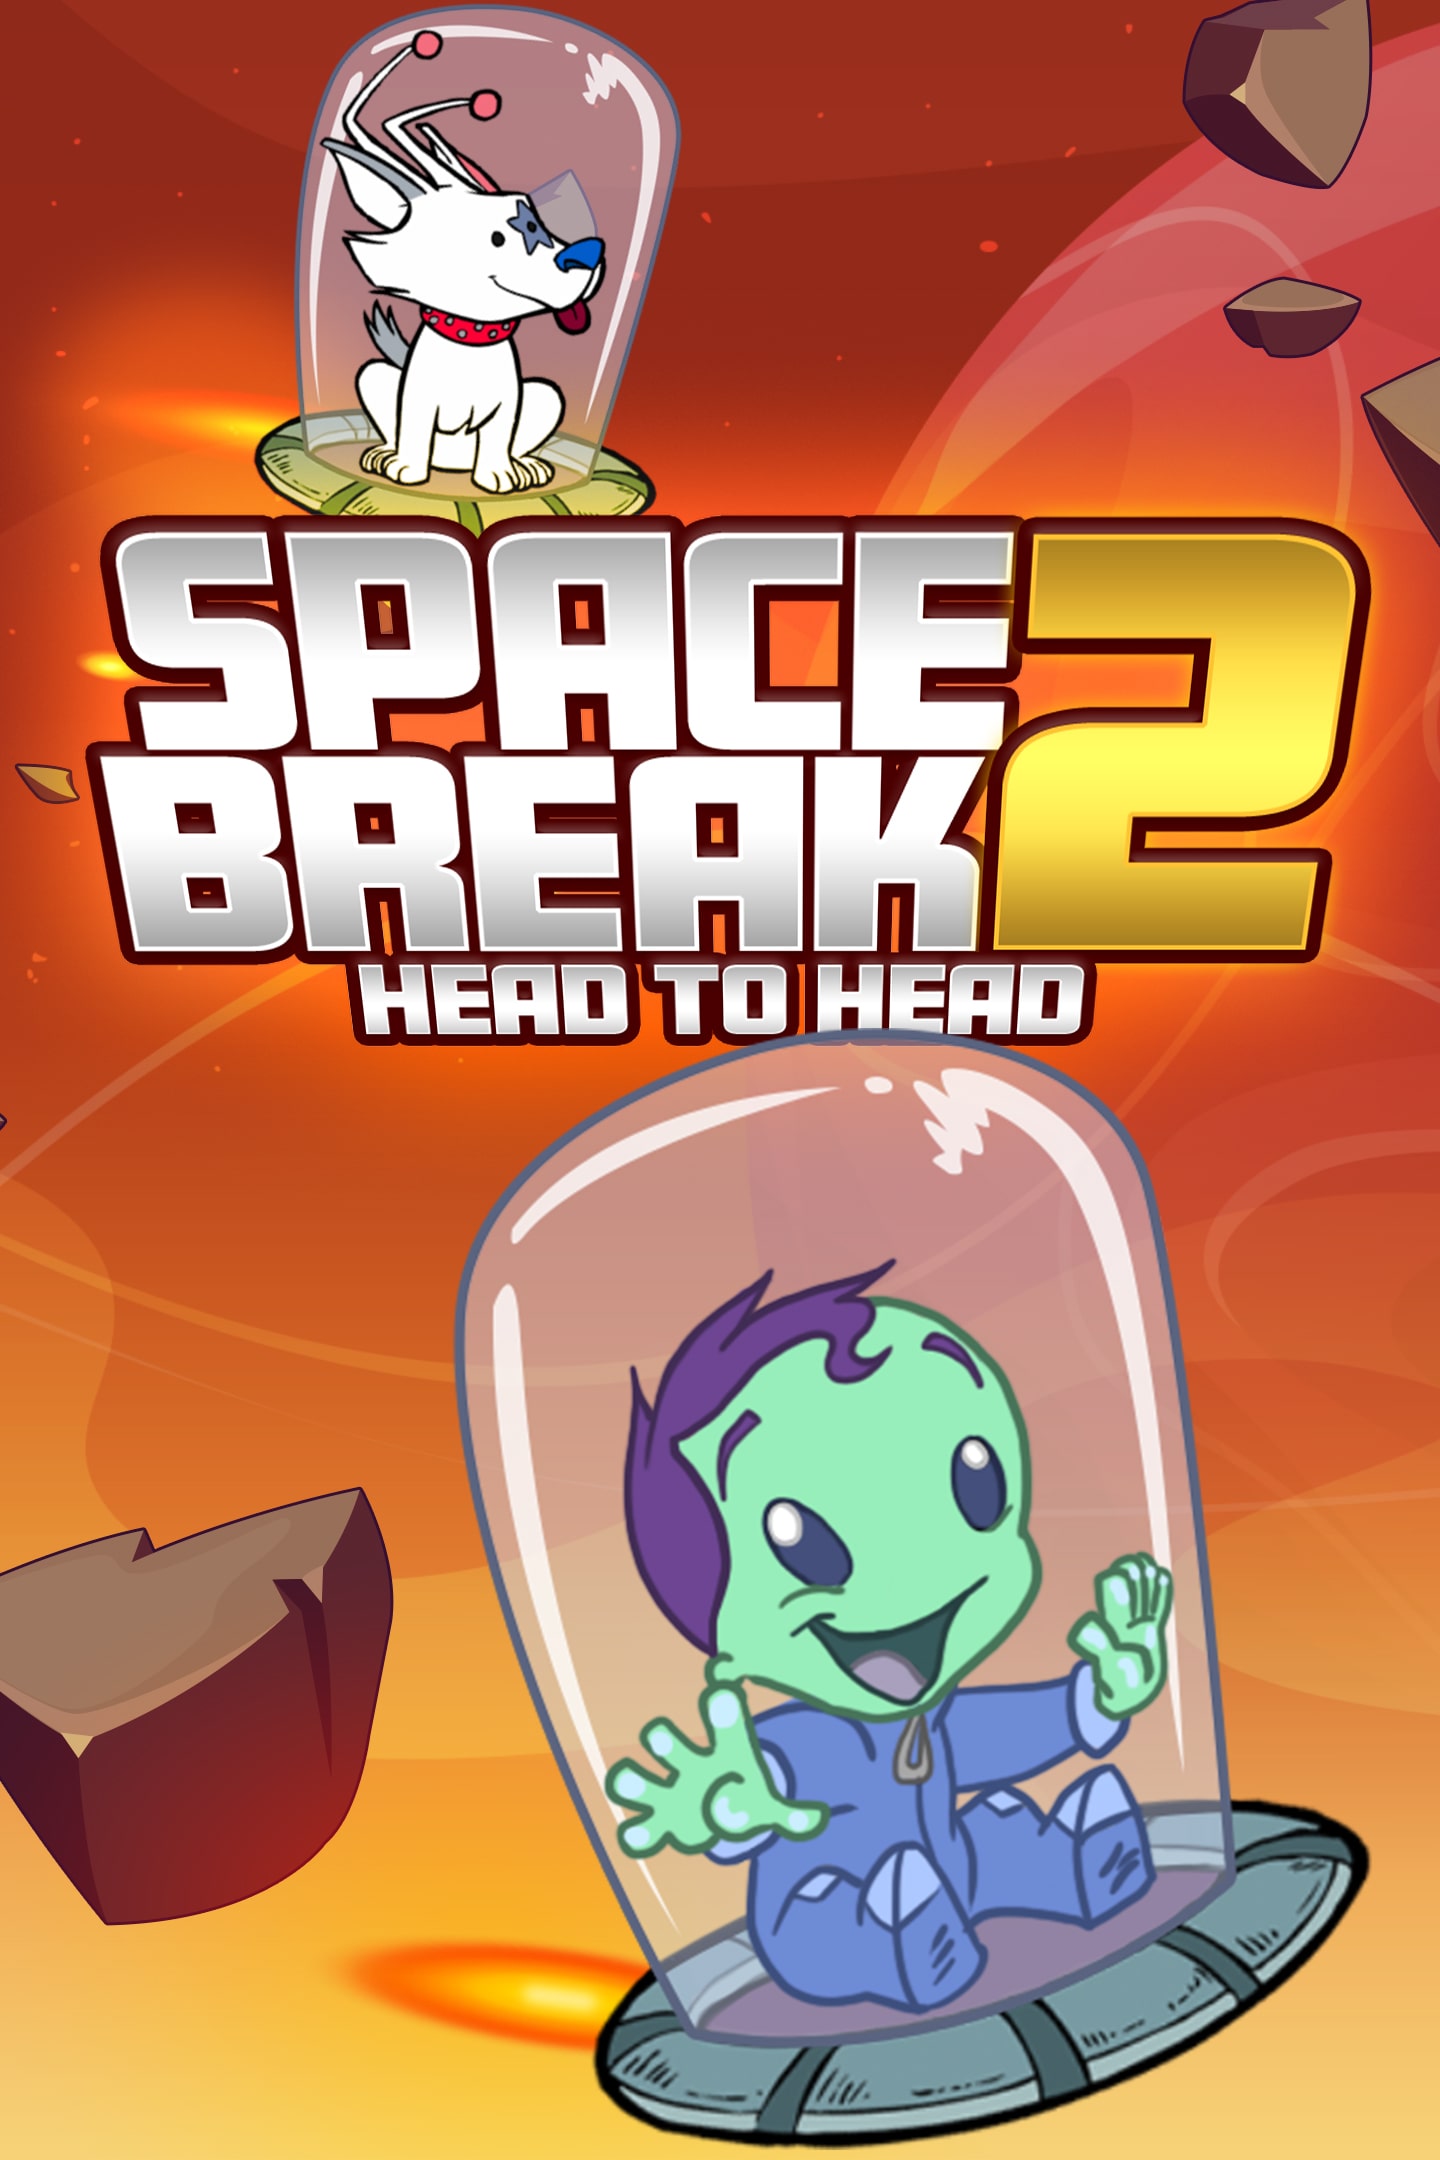 Space Break 2 Head To Head — Avatar Full Game Bundle on PS4 — price  history, screenshots, discounts • Cyprus